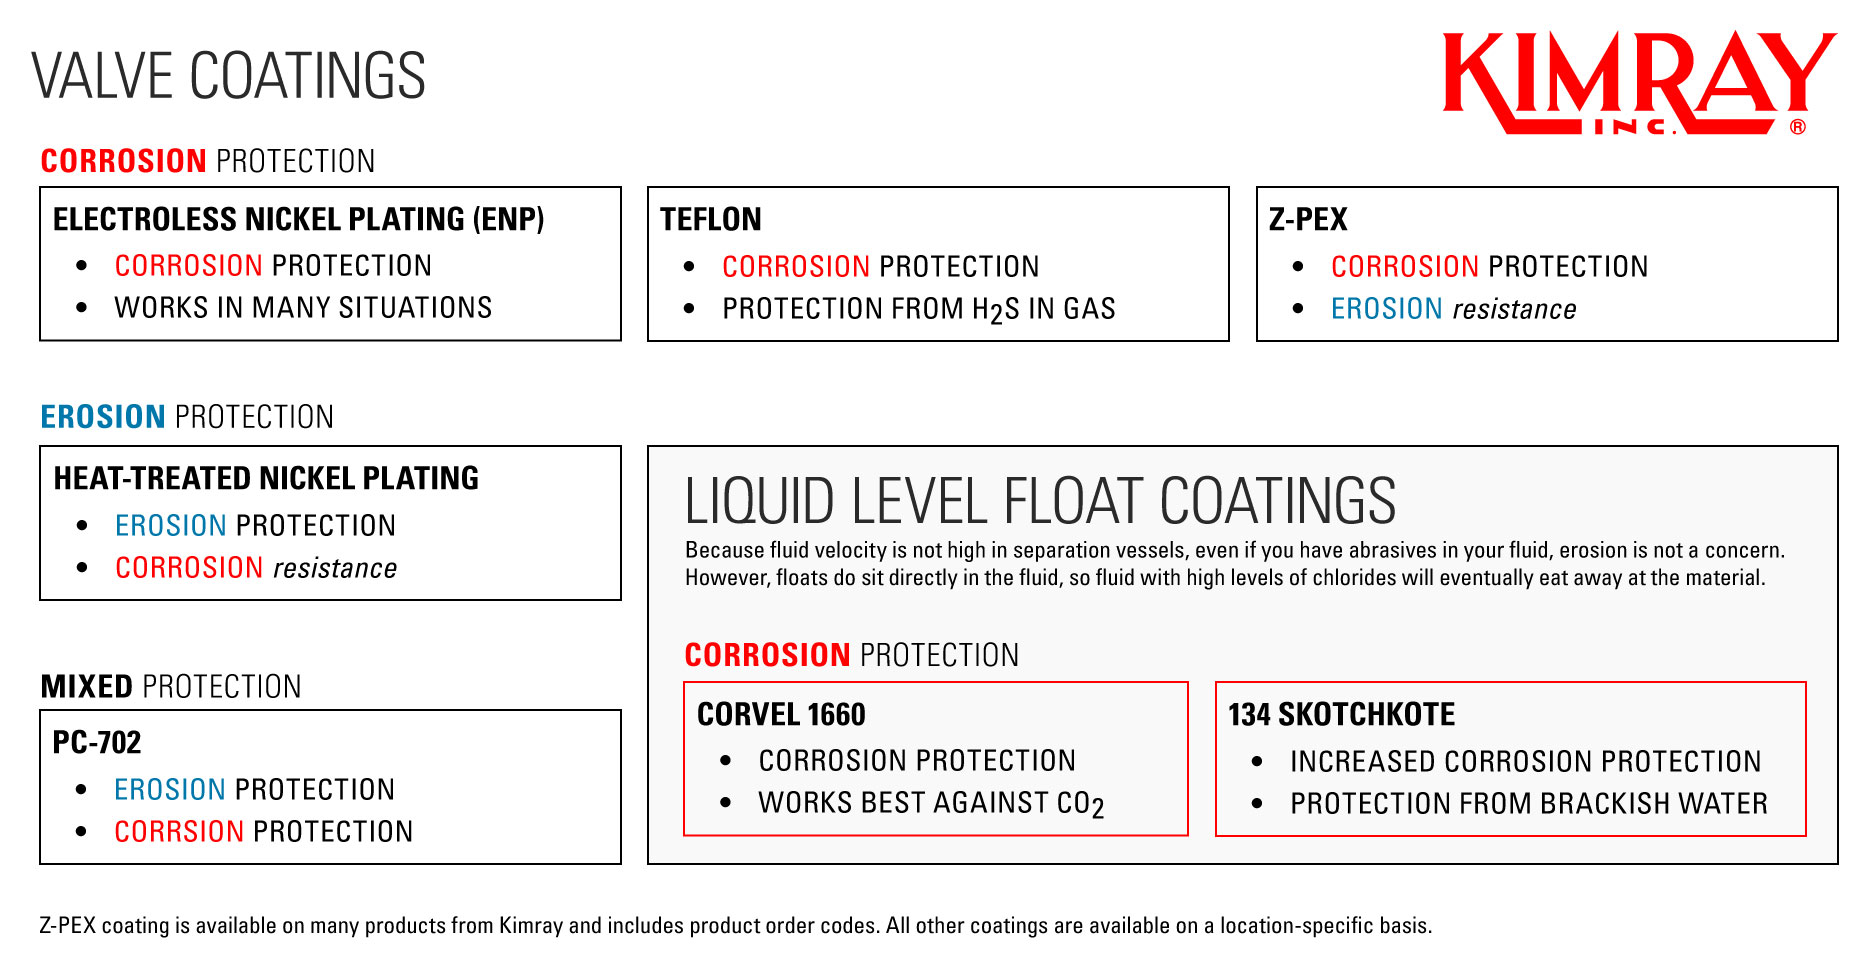 kimray coating options for corrosion and erosion protection